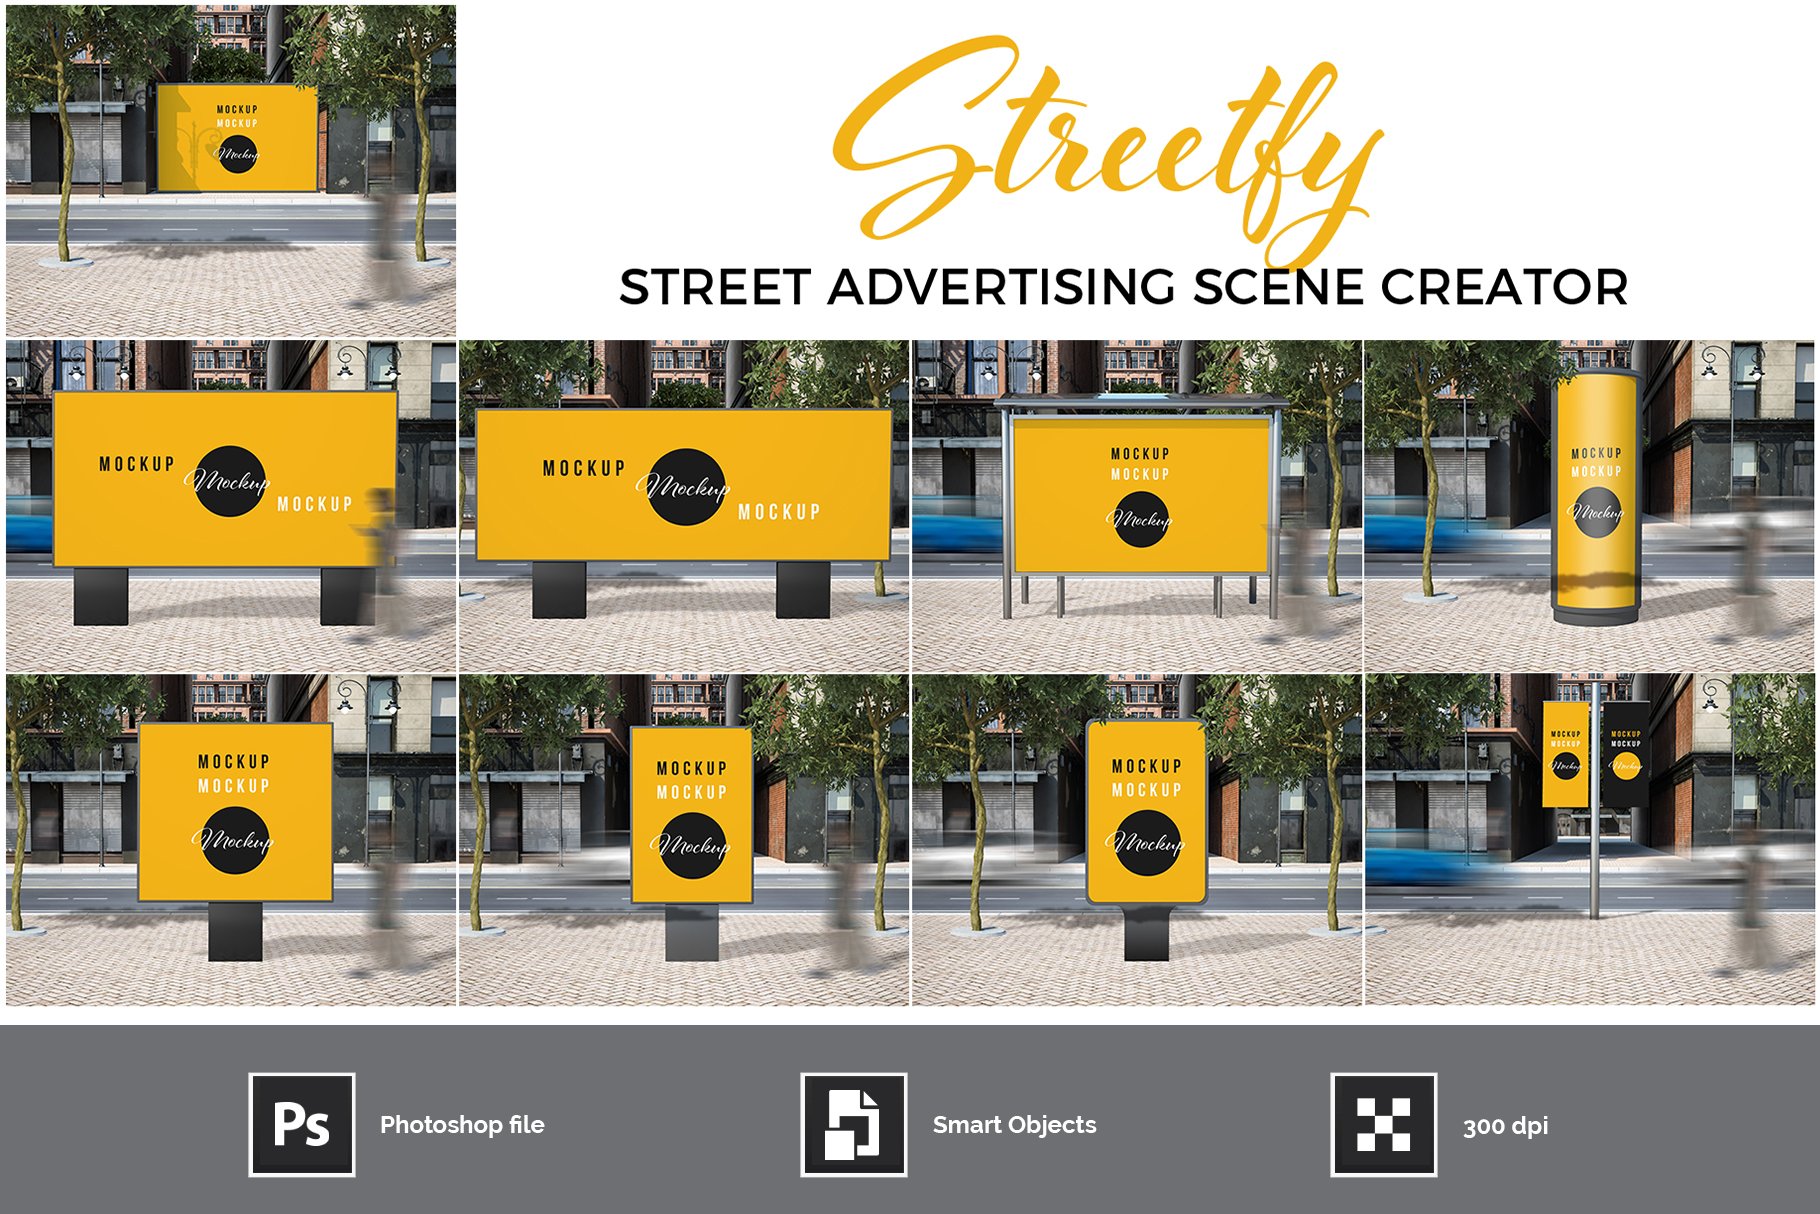 Street Advertising Scene Creator cover image.